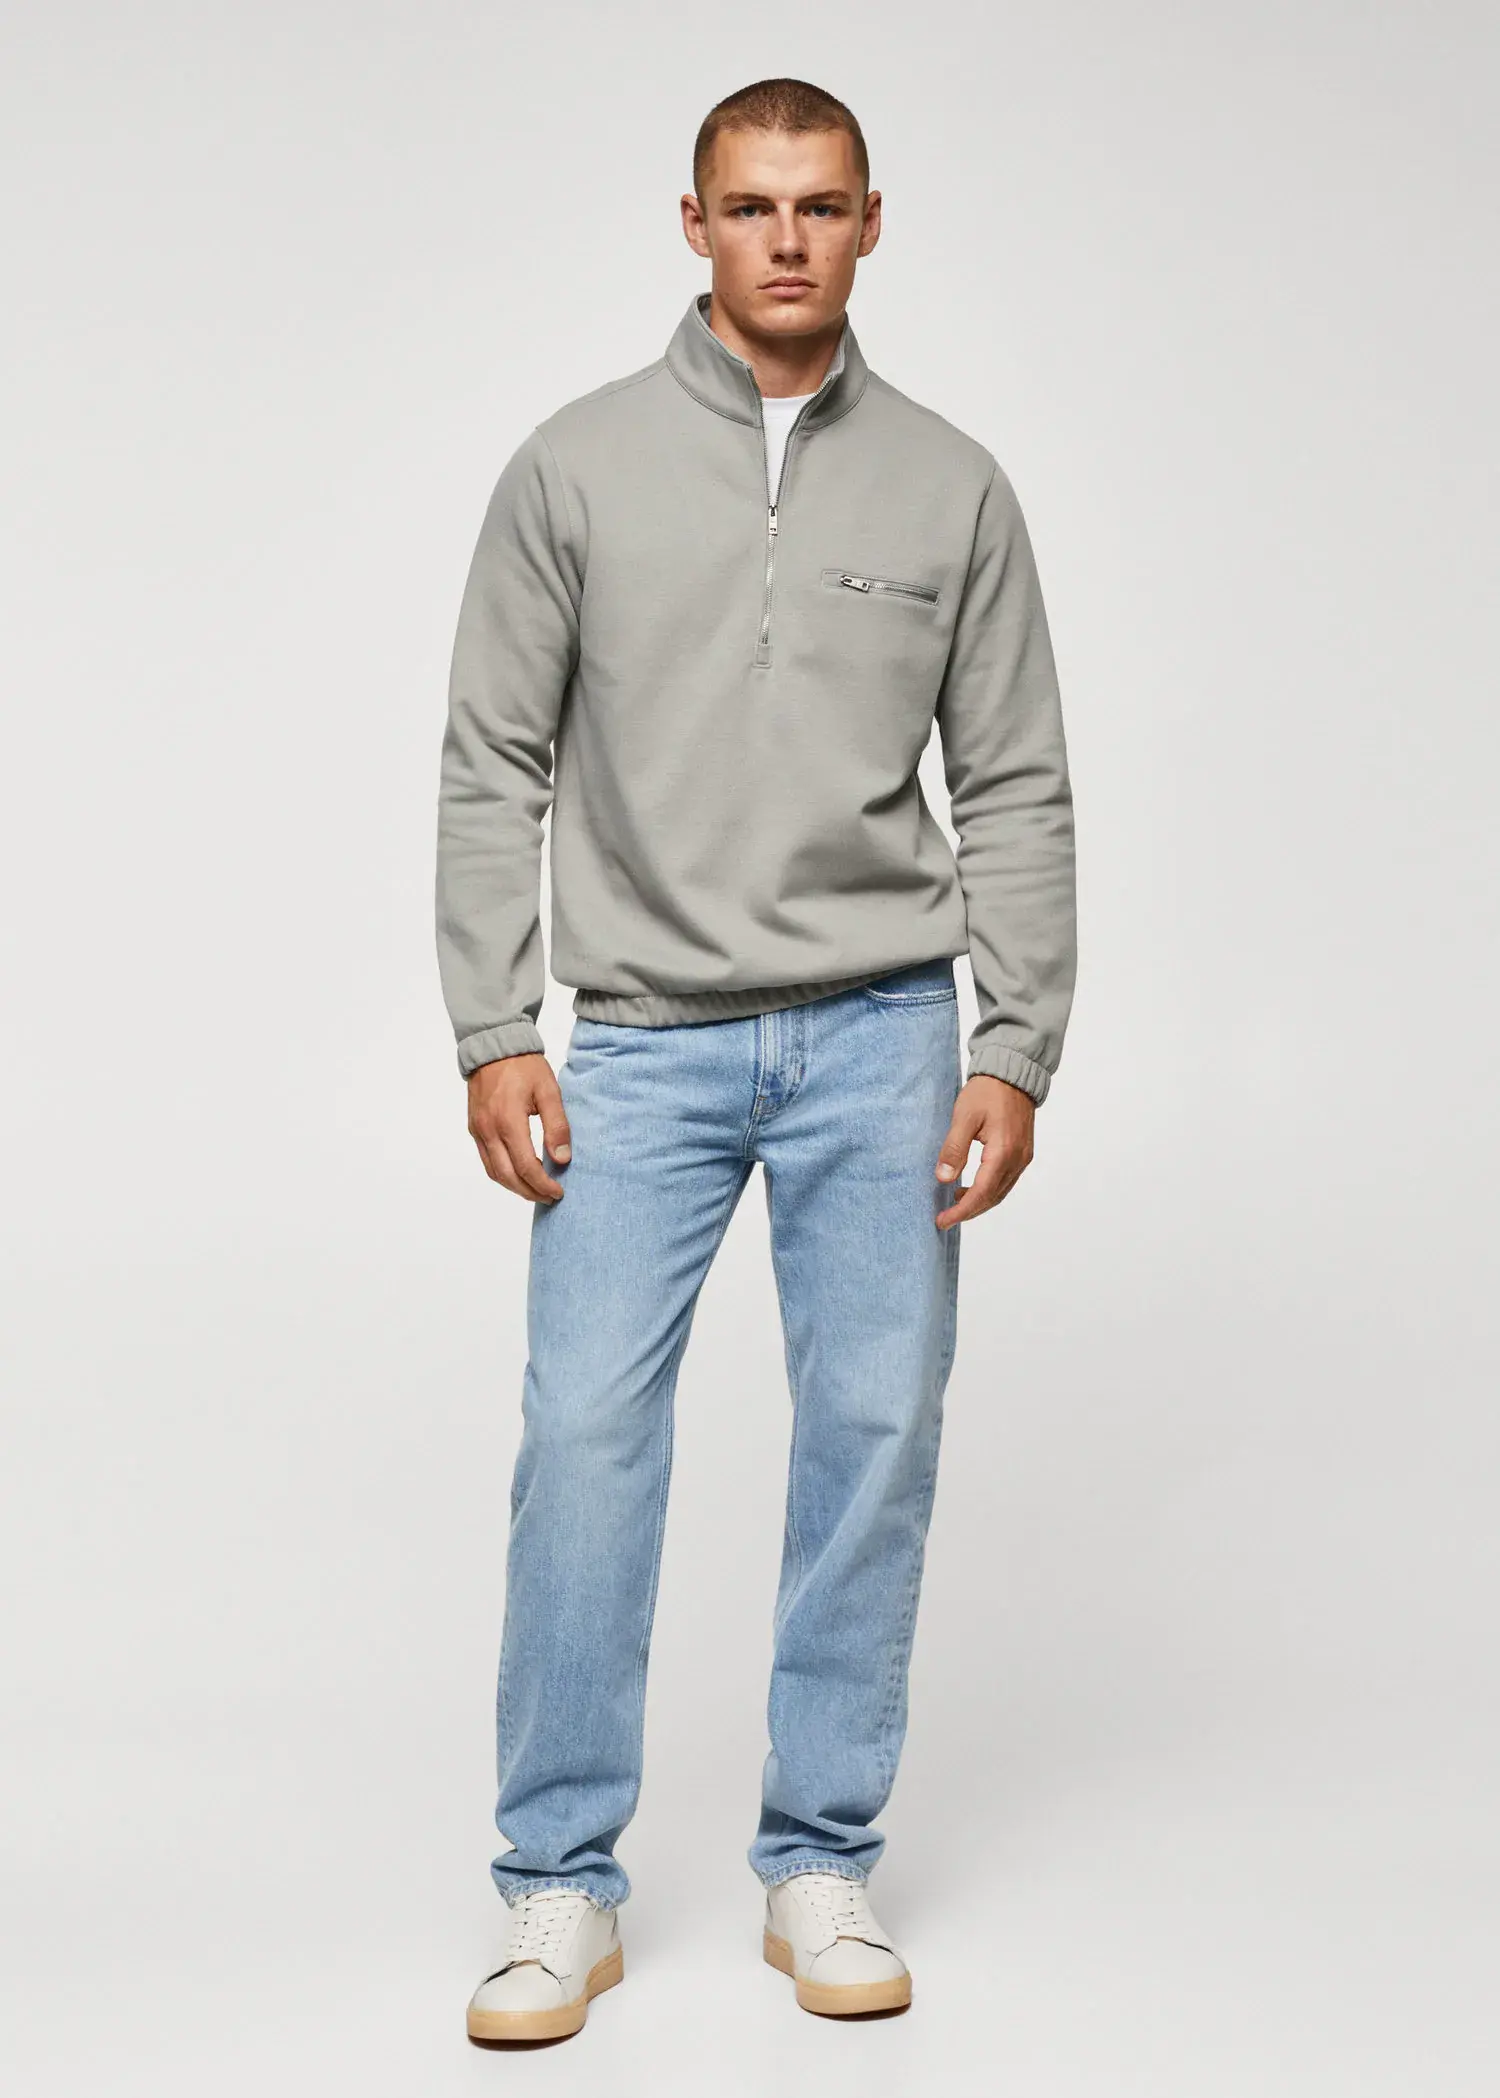 Mango Cotton sweatshirt with zip neck. 2